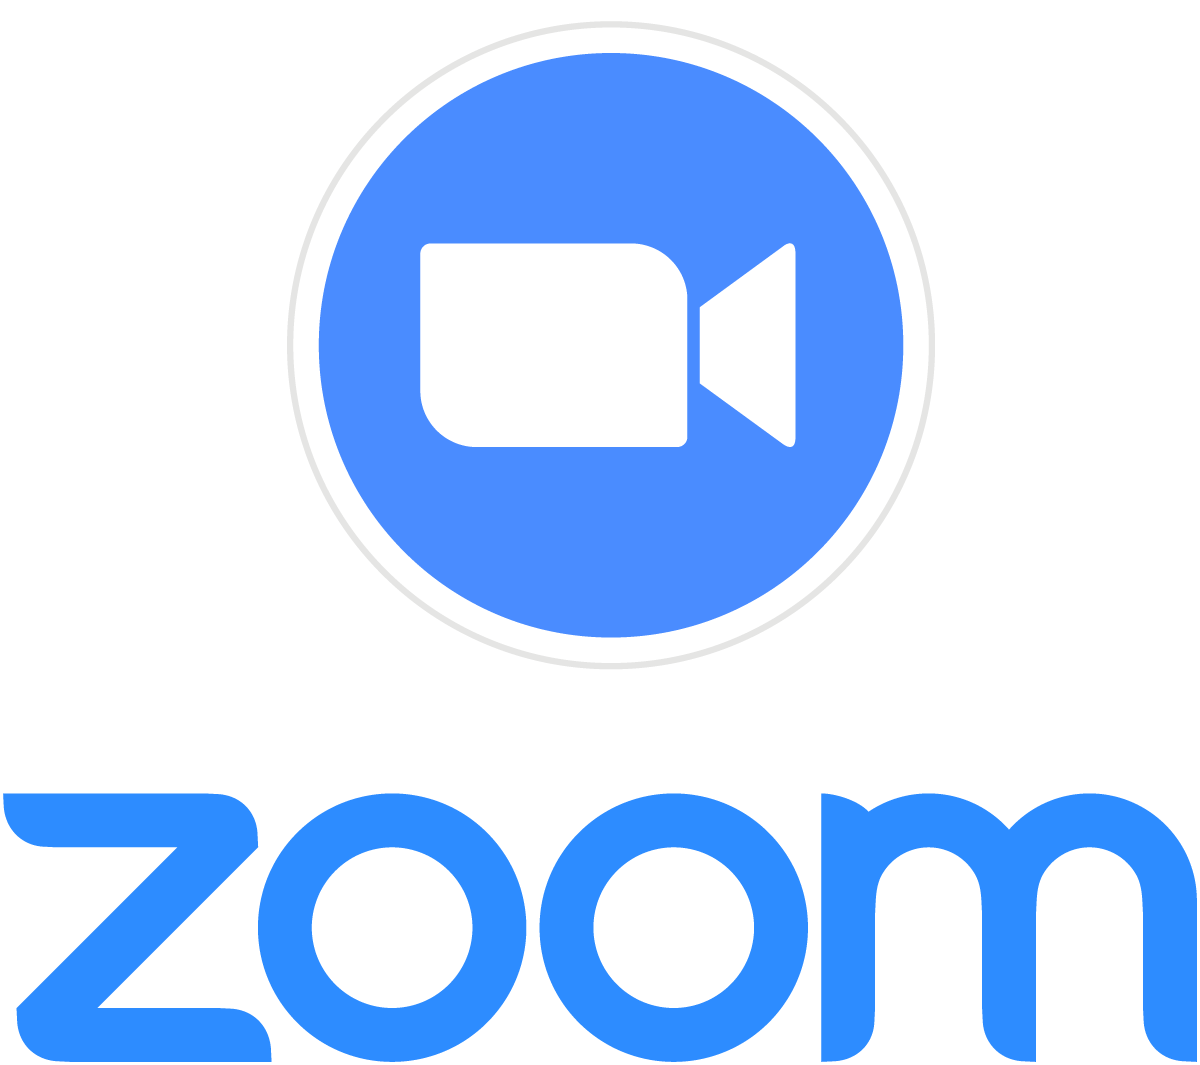 zoom-logo.png